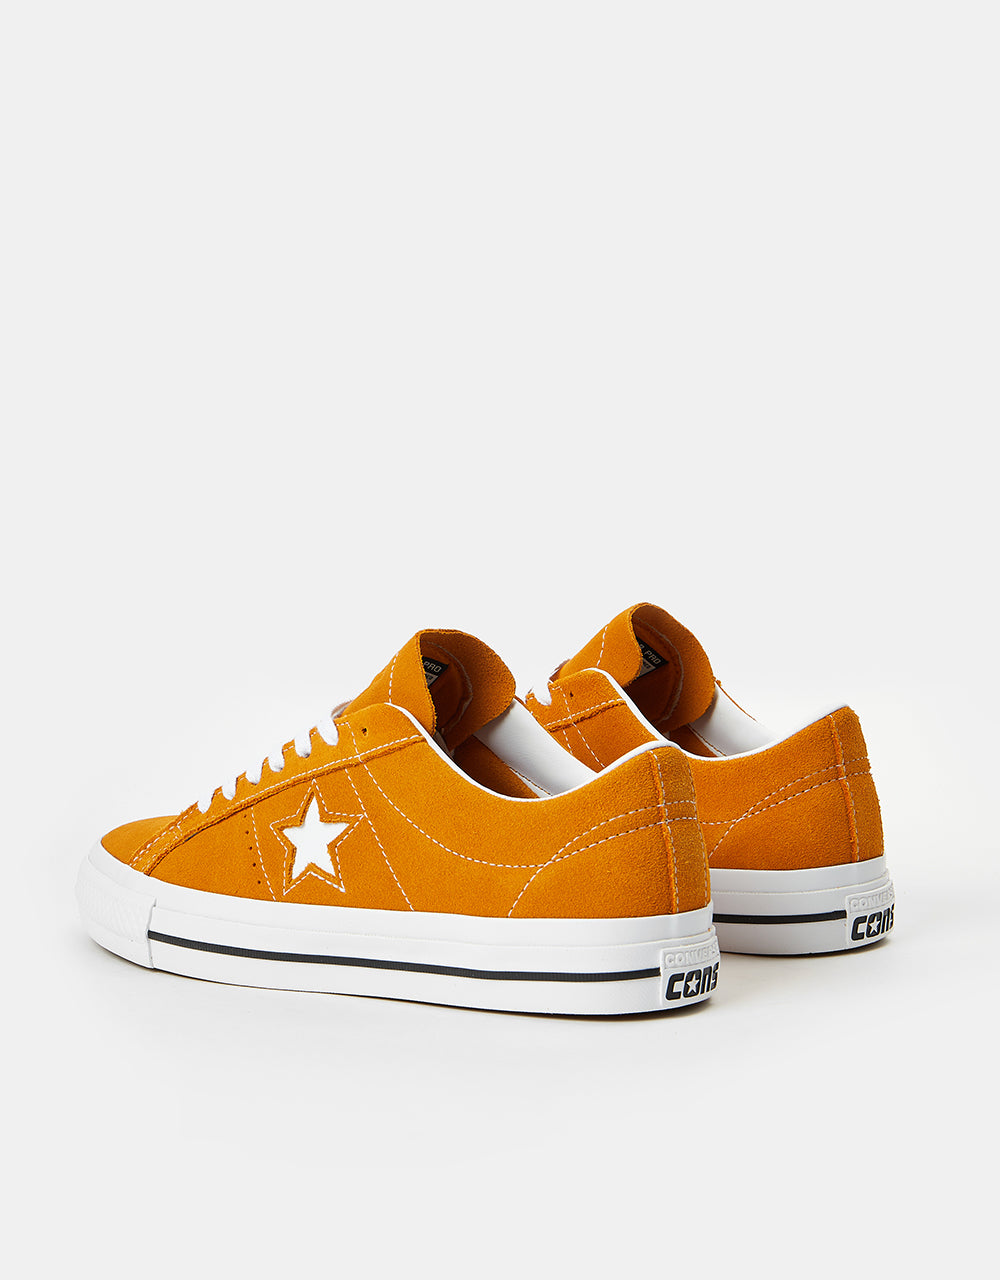 Converse One Star Pro Skate Shoes - Golden Sundial/White/Black